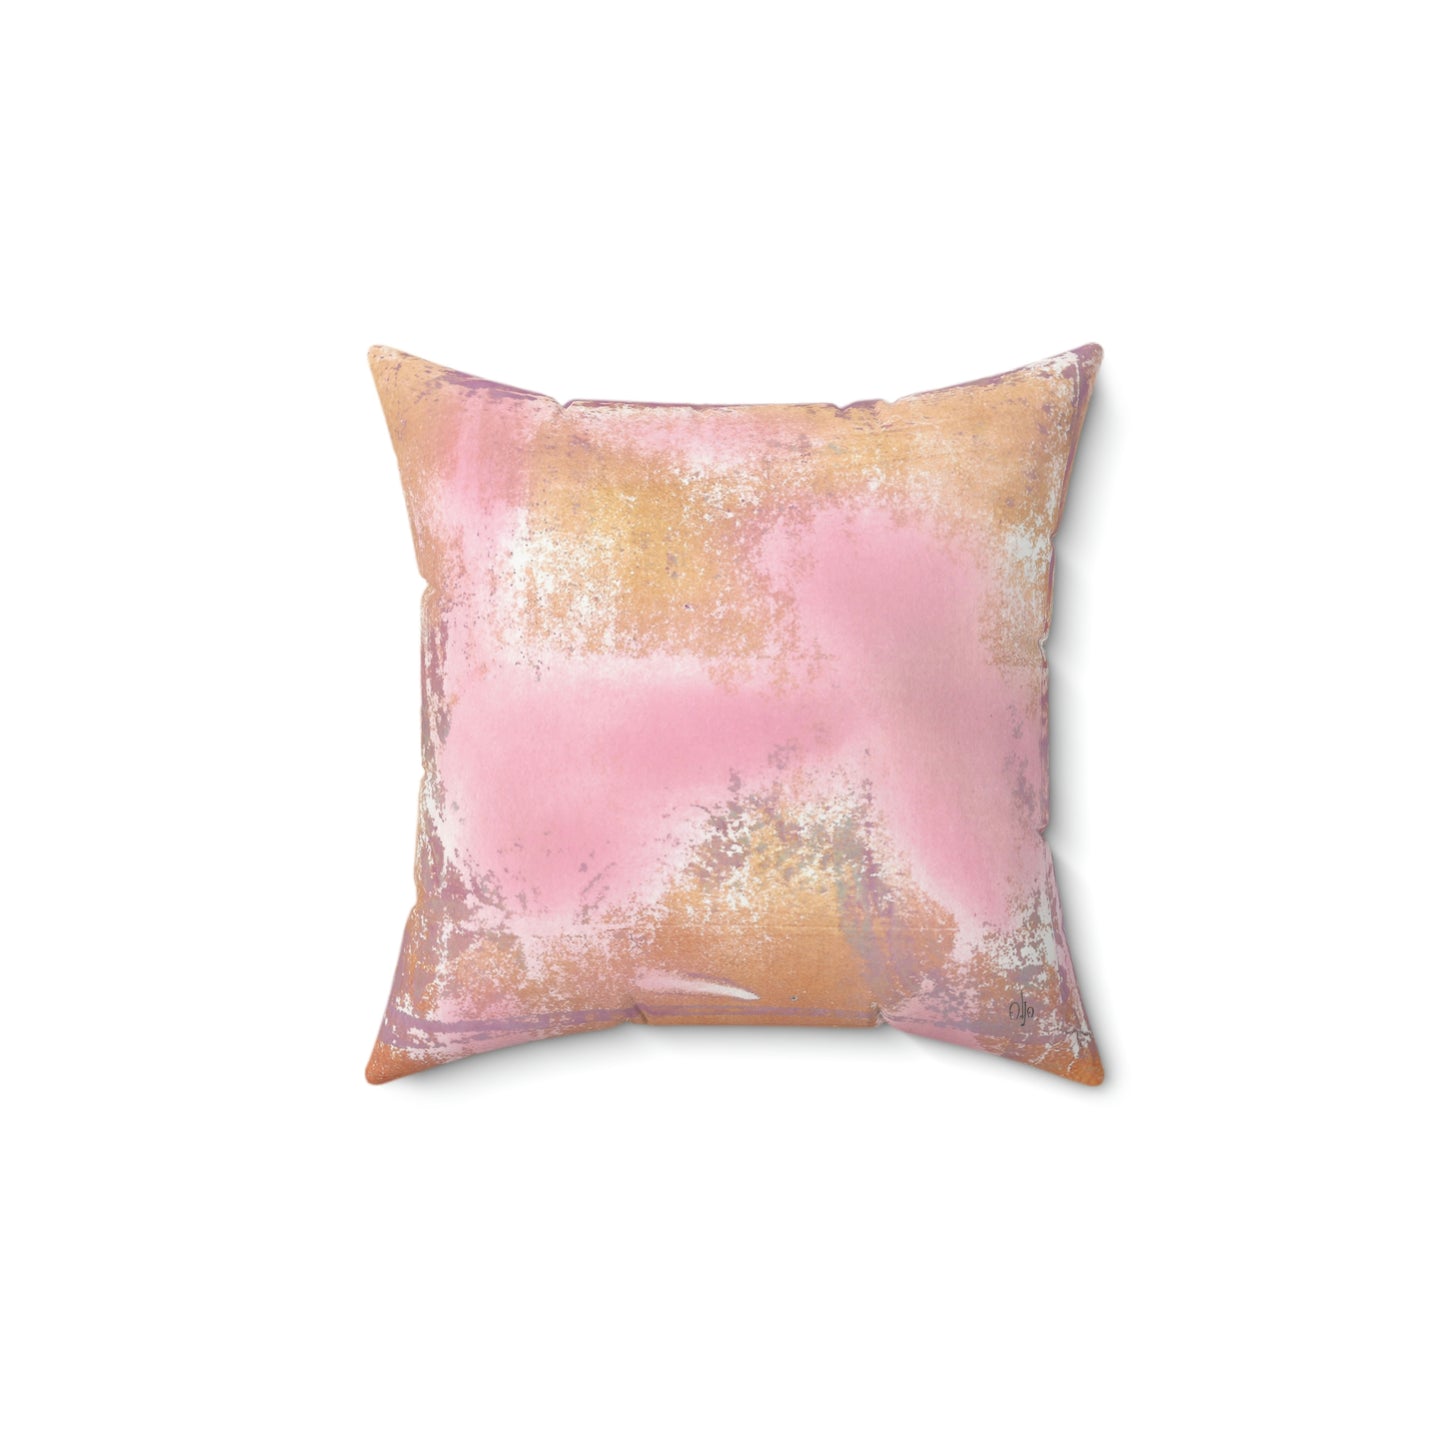 Passionate Pink Square Pillow - Alja Design